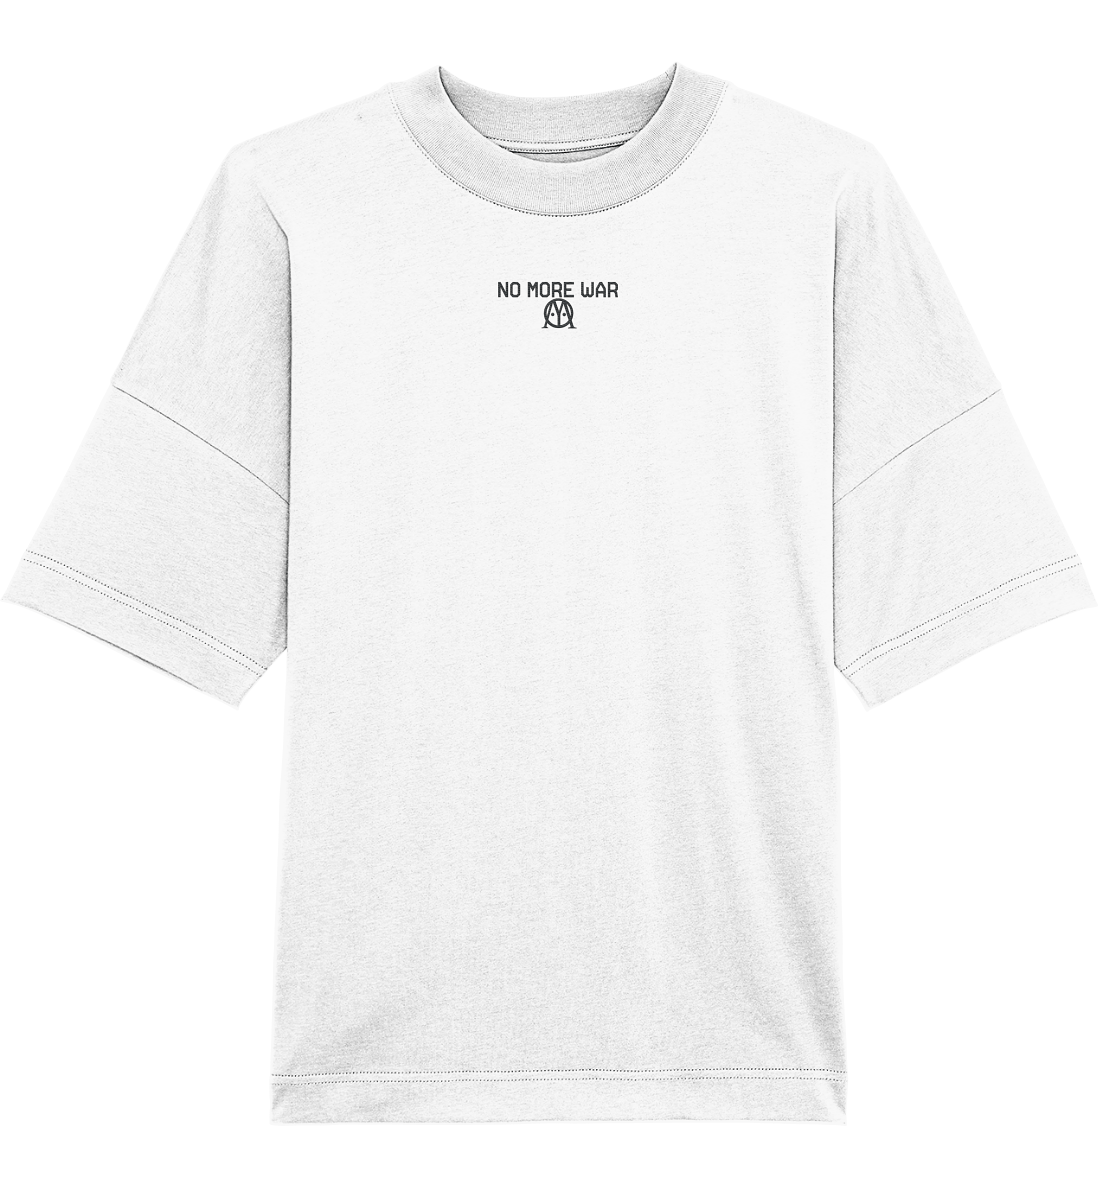 front-organic-oversize-shirt-stick-f8f8f8-1116x-1.png